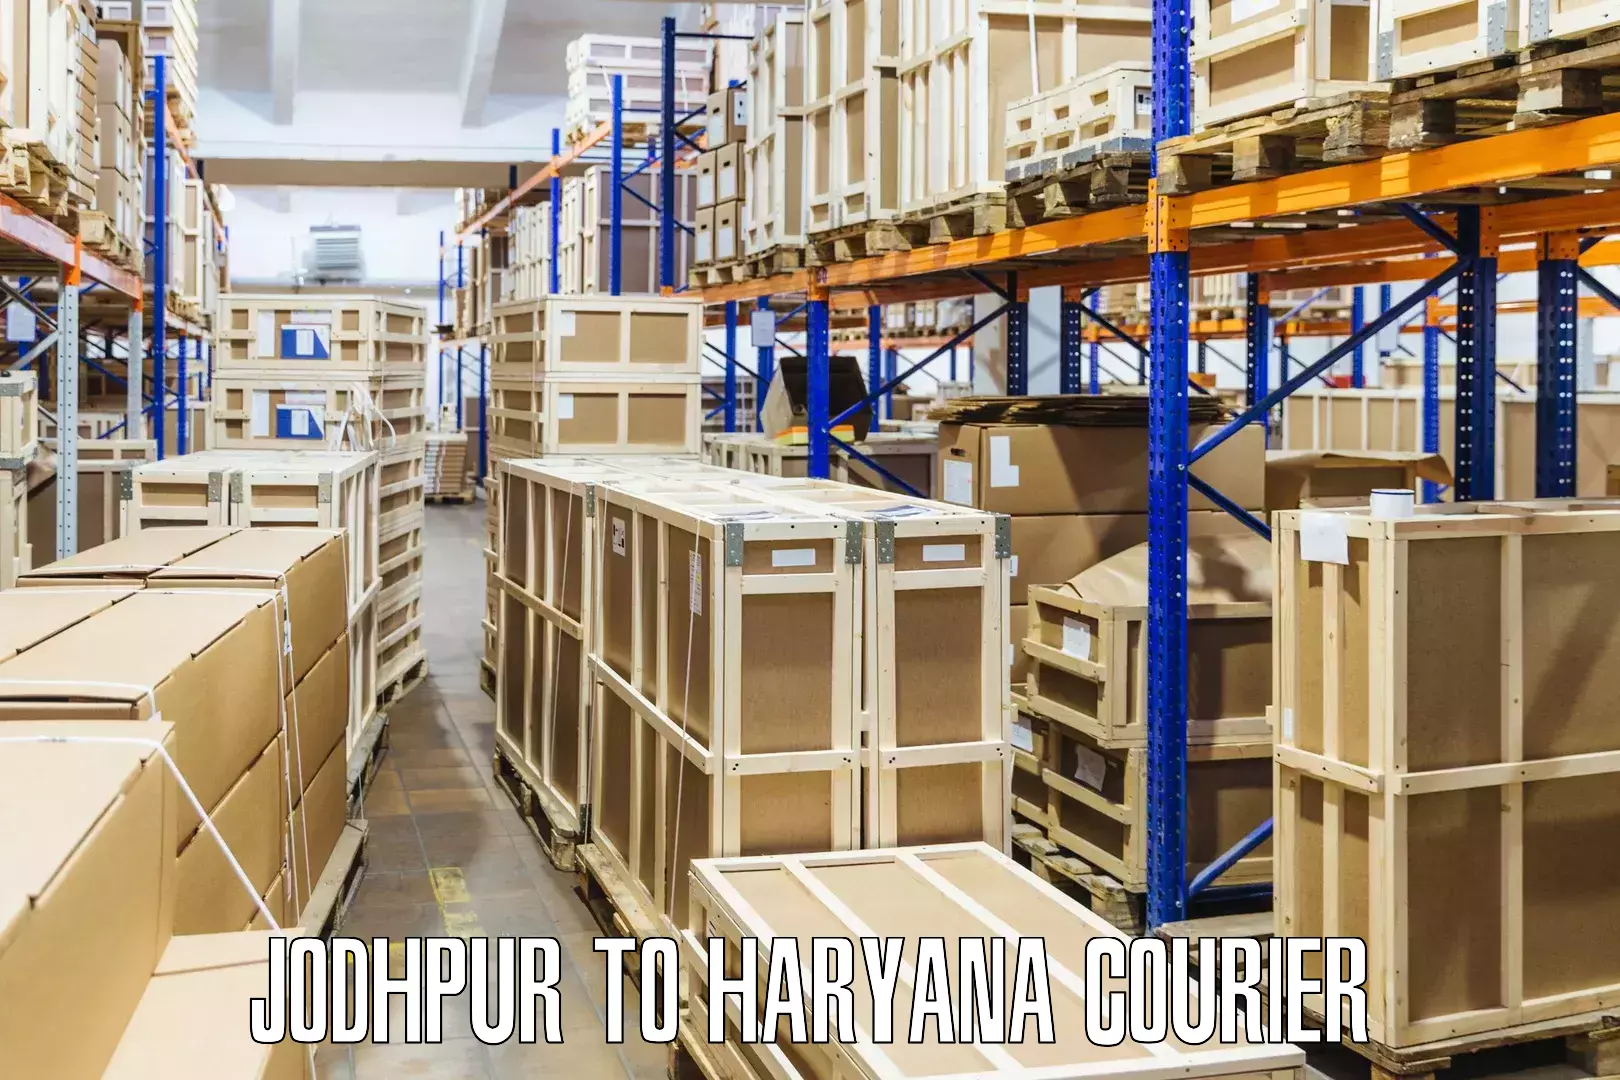 Nationwide delivery network Jodhpur to Narwana